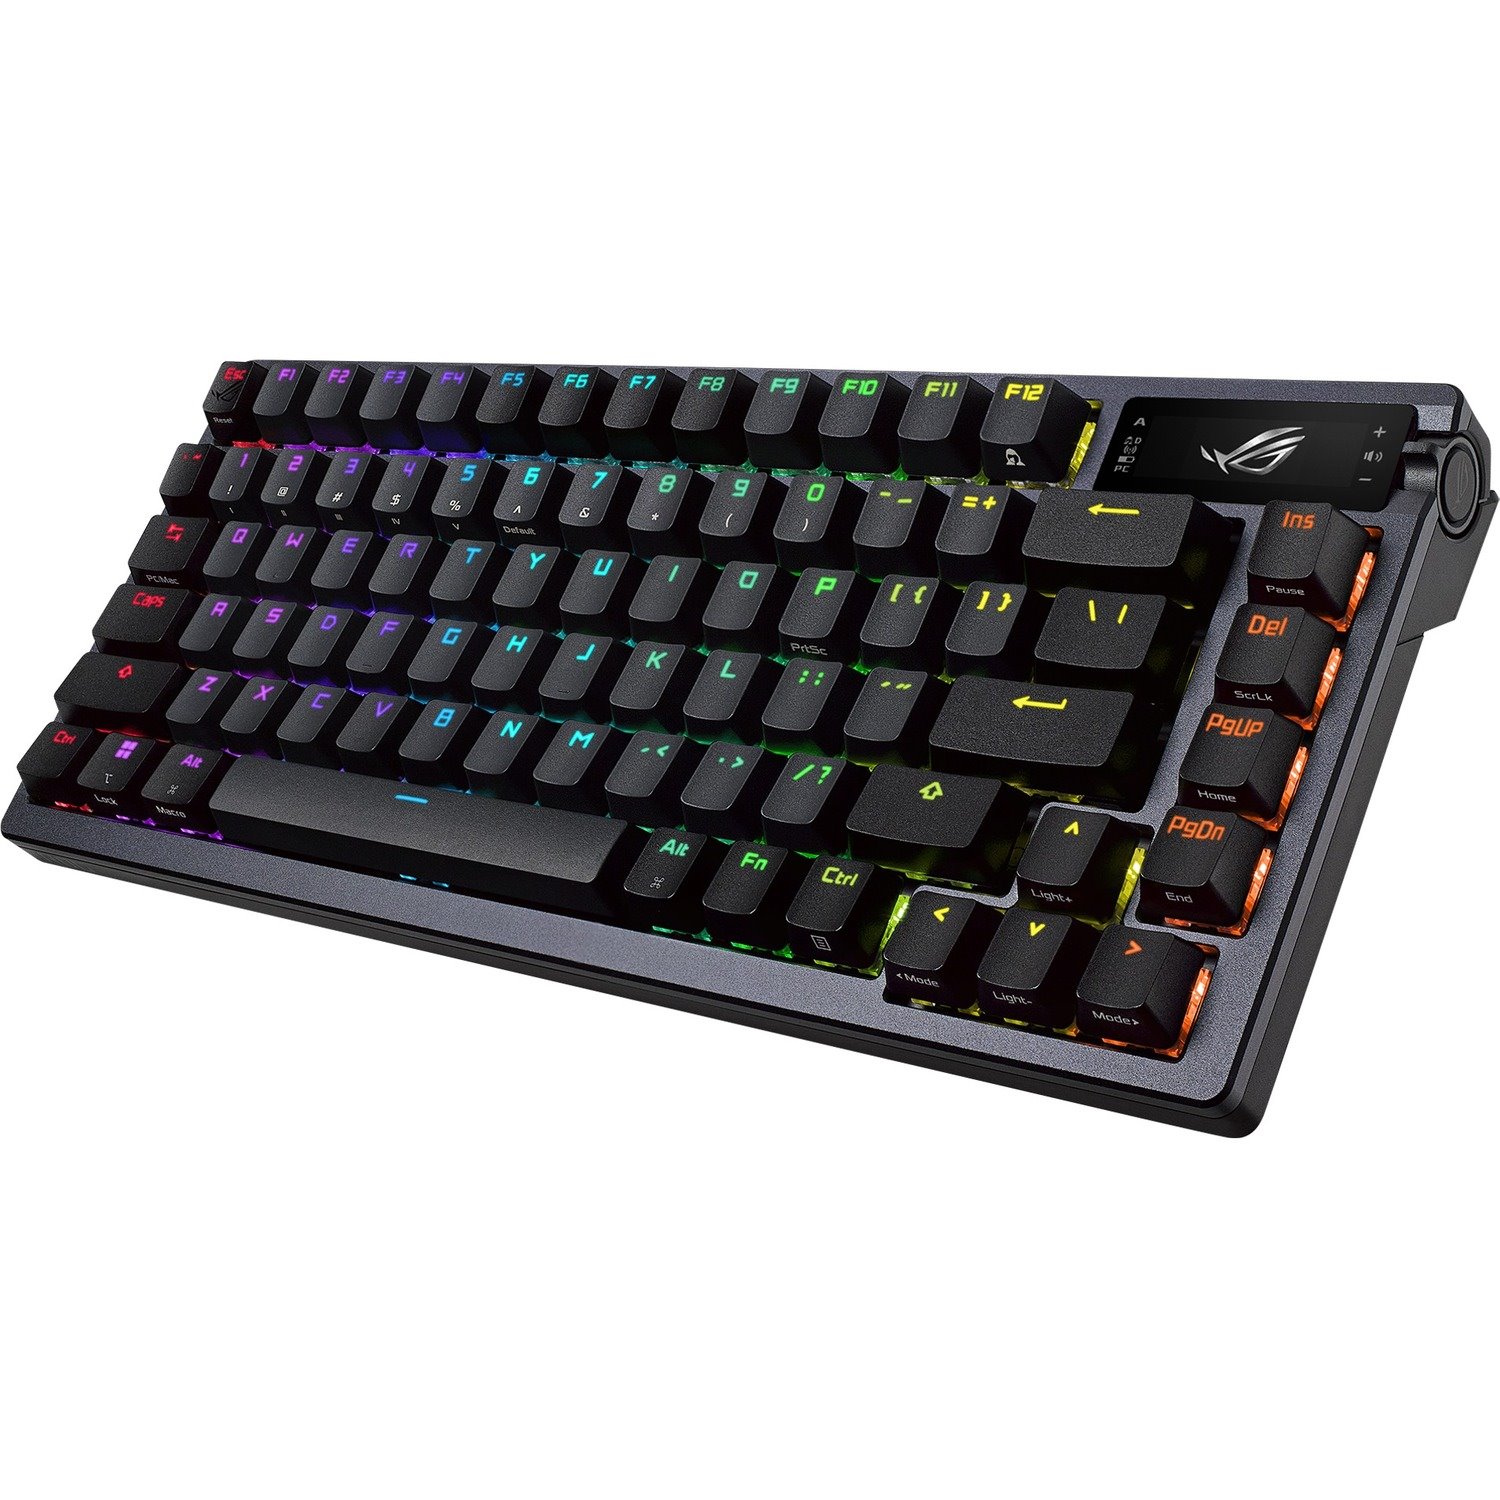 Asus ROG Azoth Gaming Keyboard - Wired/Wireless Connectivity - USB 2.0 Interface - RGB LED - Gunmetal